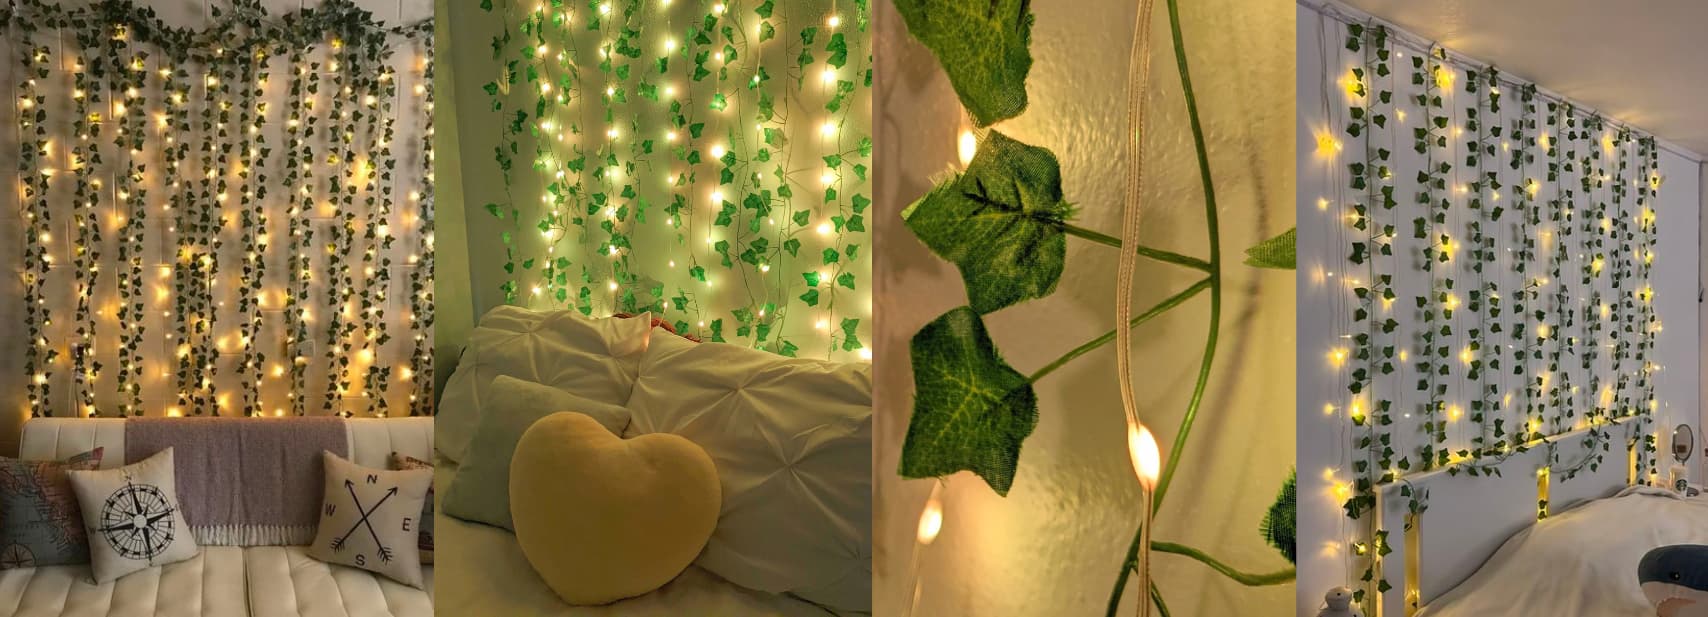 chambre aesthetic guirlande avec mur vegetal